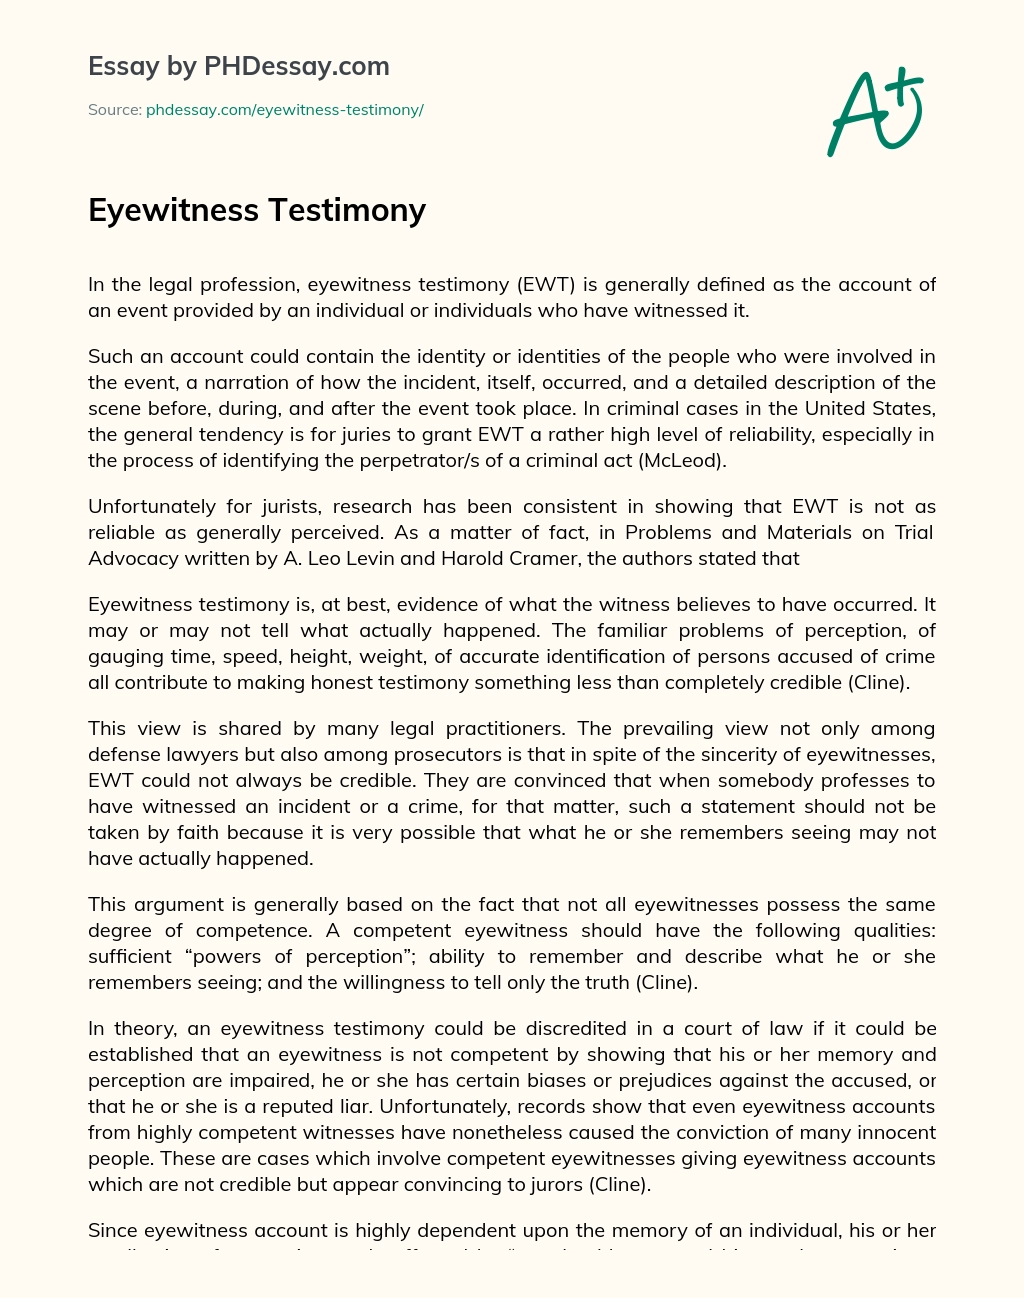 Eyewitness Testimony essay